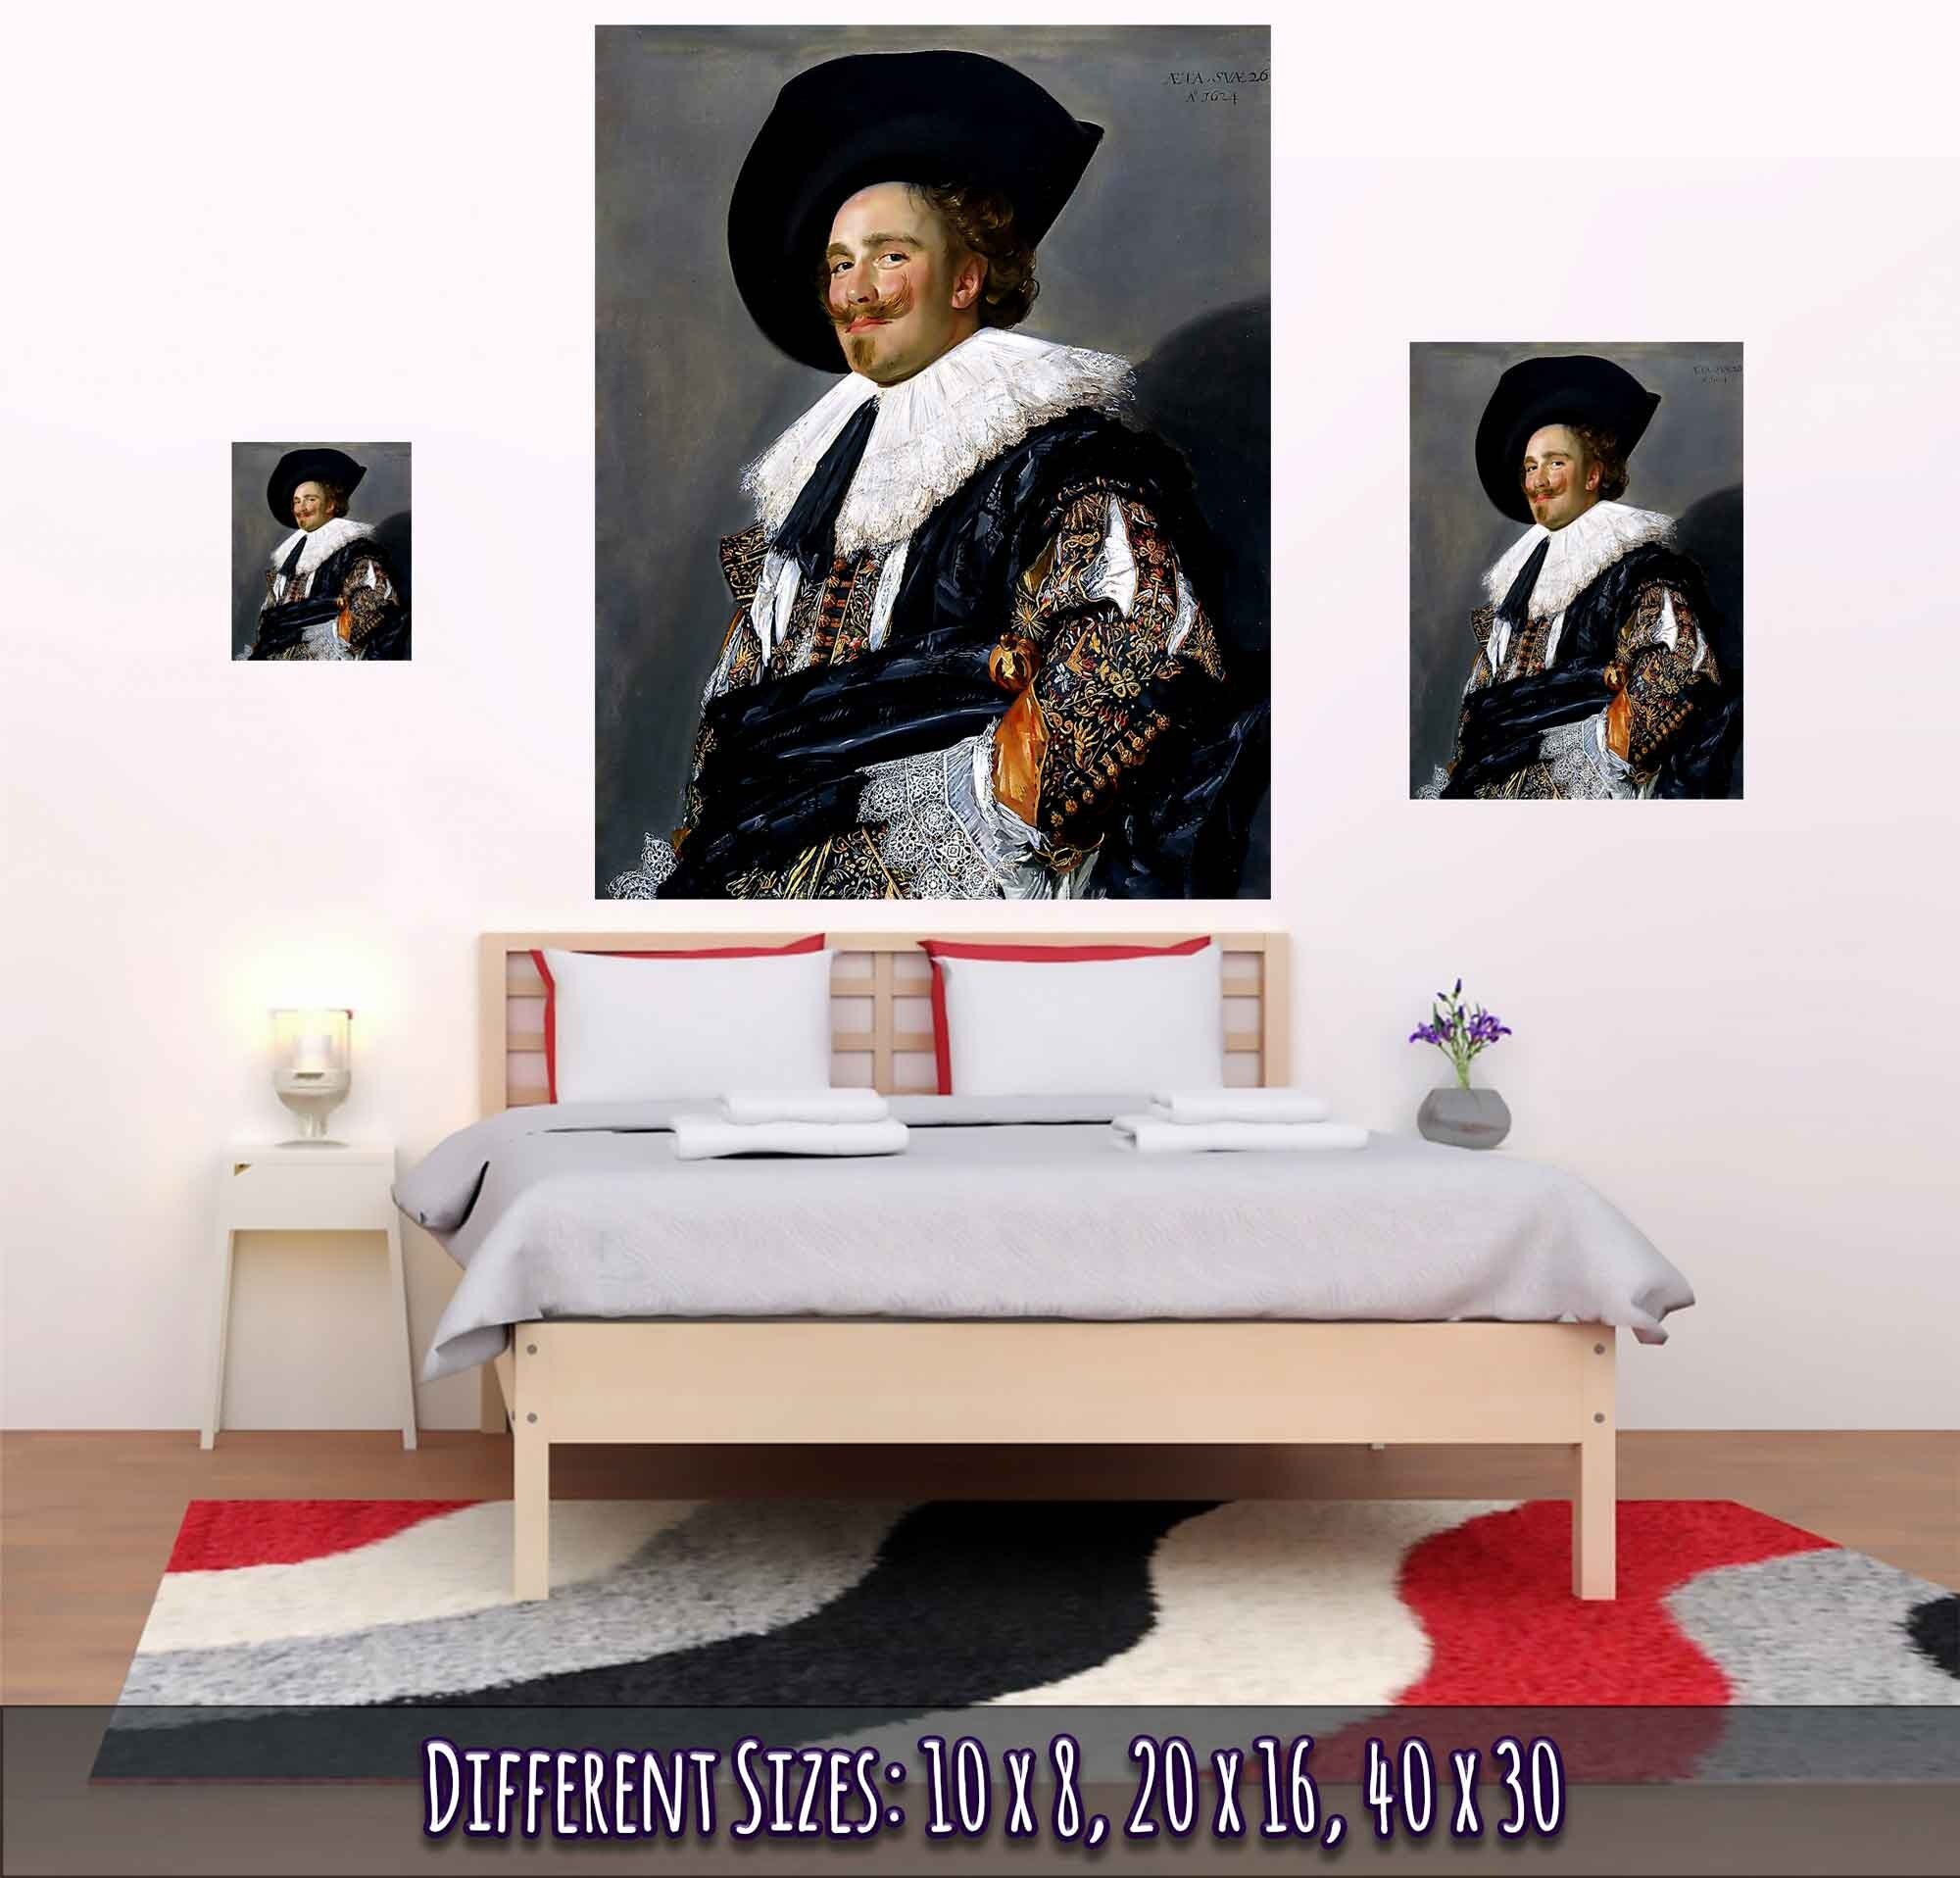 Laughing Cavalier Poster, Franz Hals - Laughing Cavalier Print - WallArtPrints4U